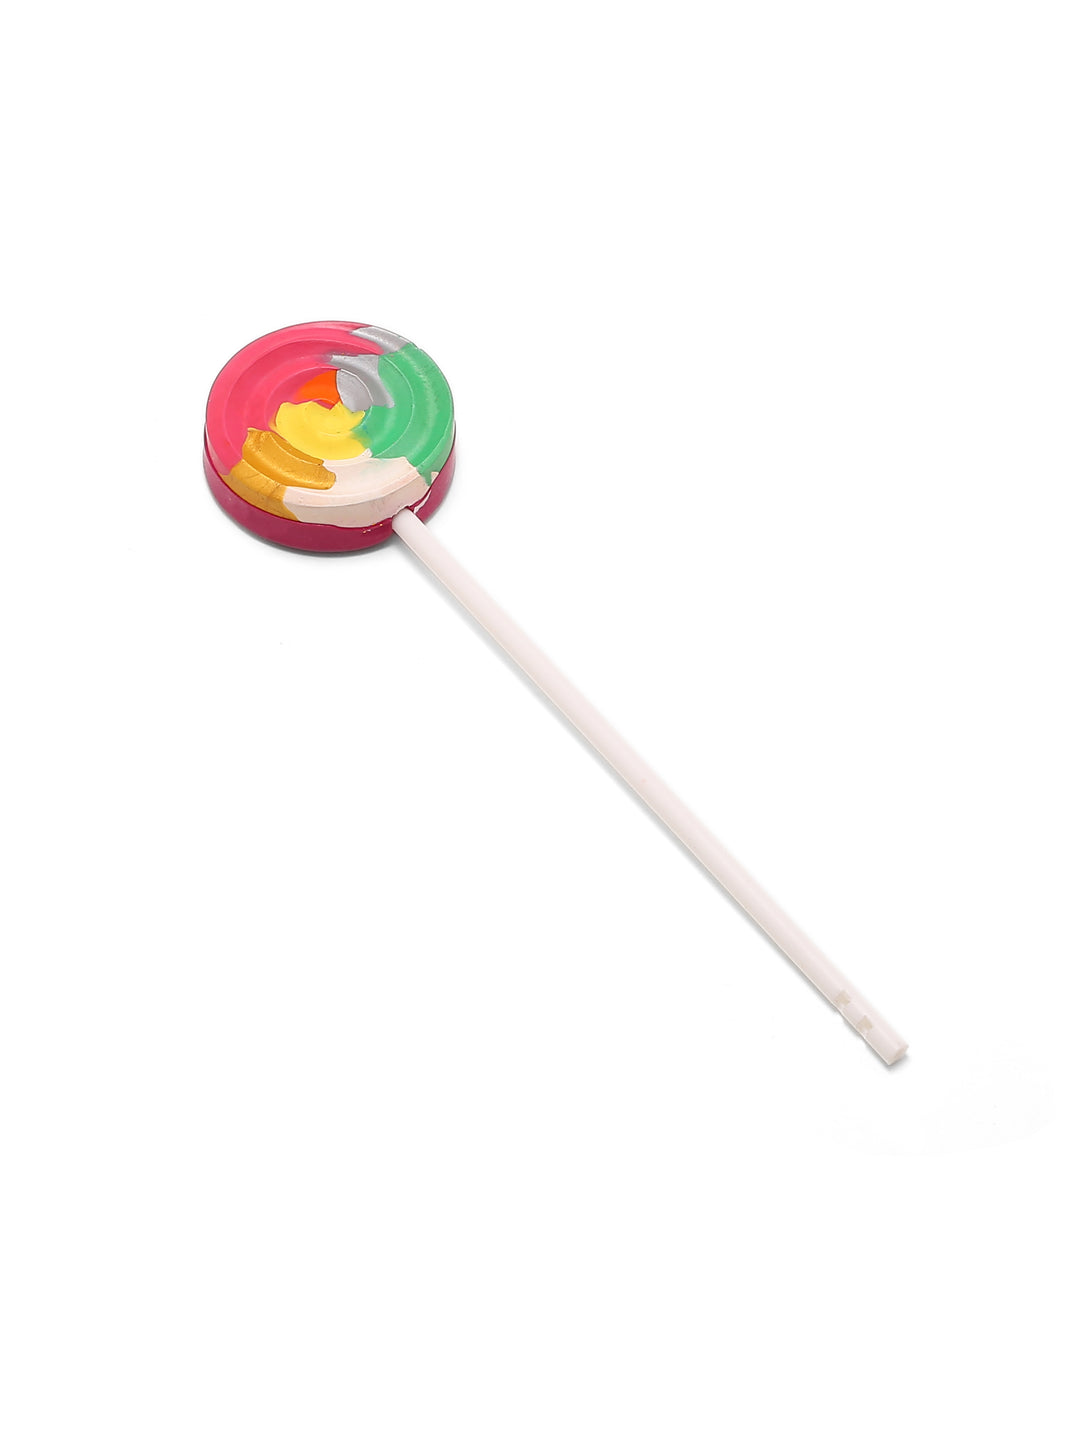 The Lollipop Crayon (1 piece)